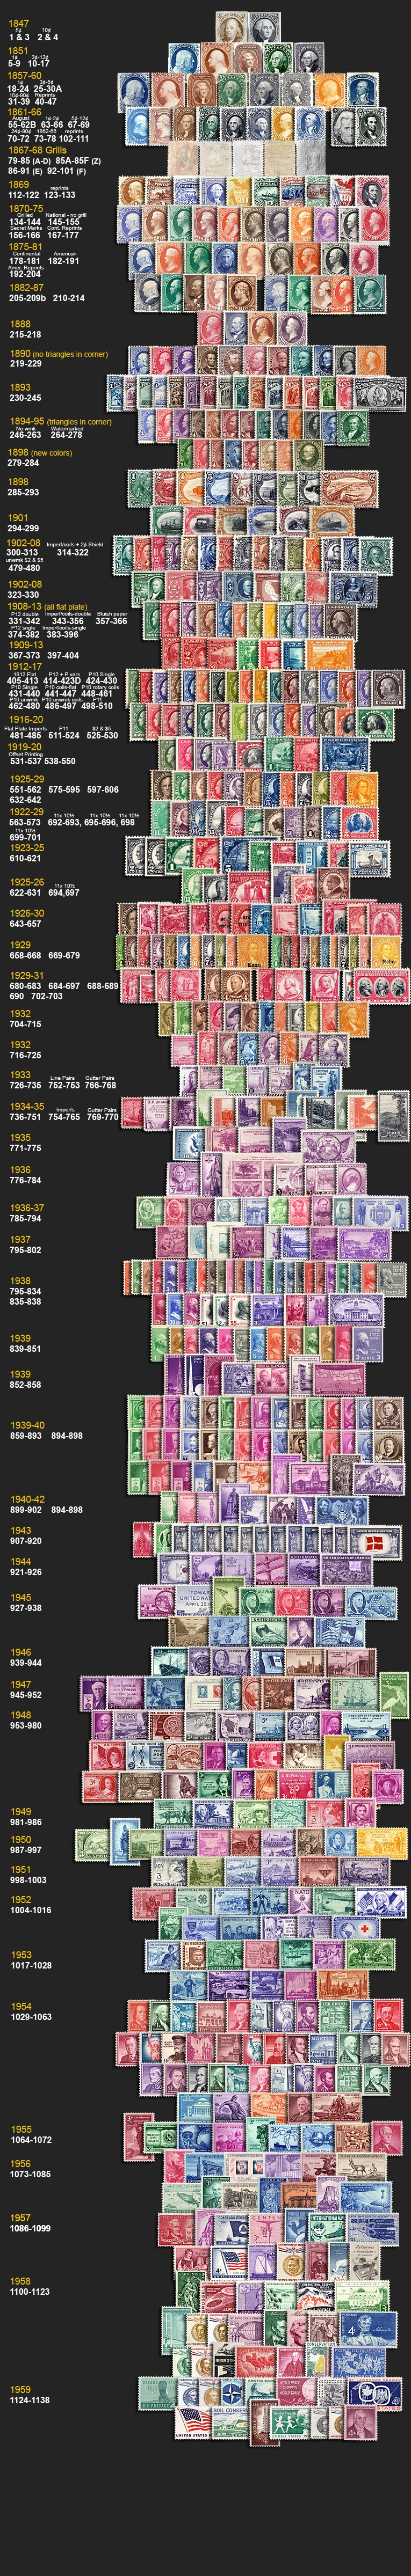 US stamp values